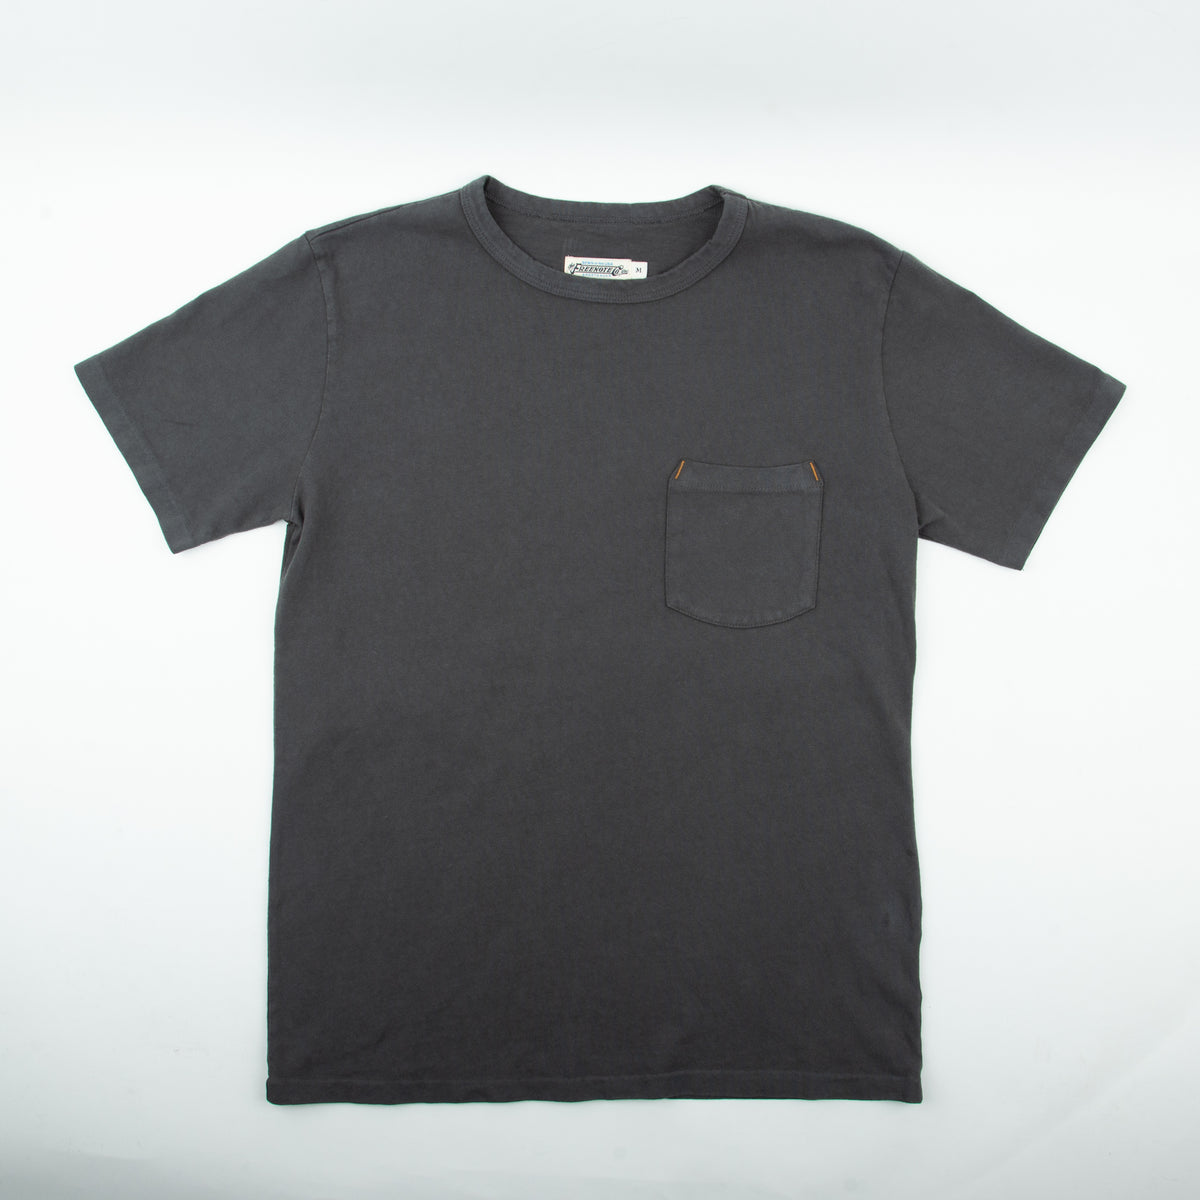 T-shirt SLIM PUSH UP K117 black MITARE Size S Color Black